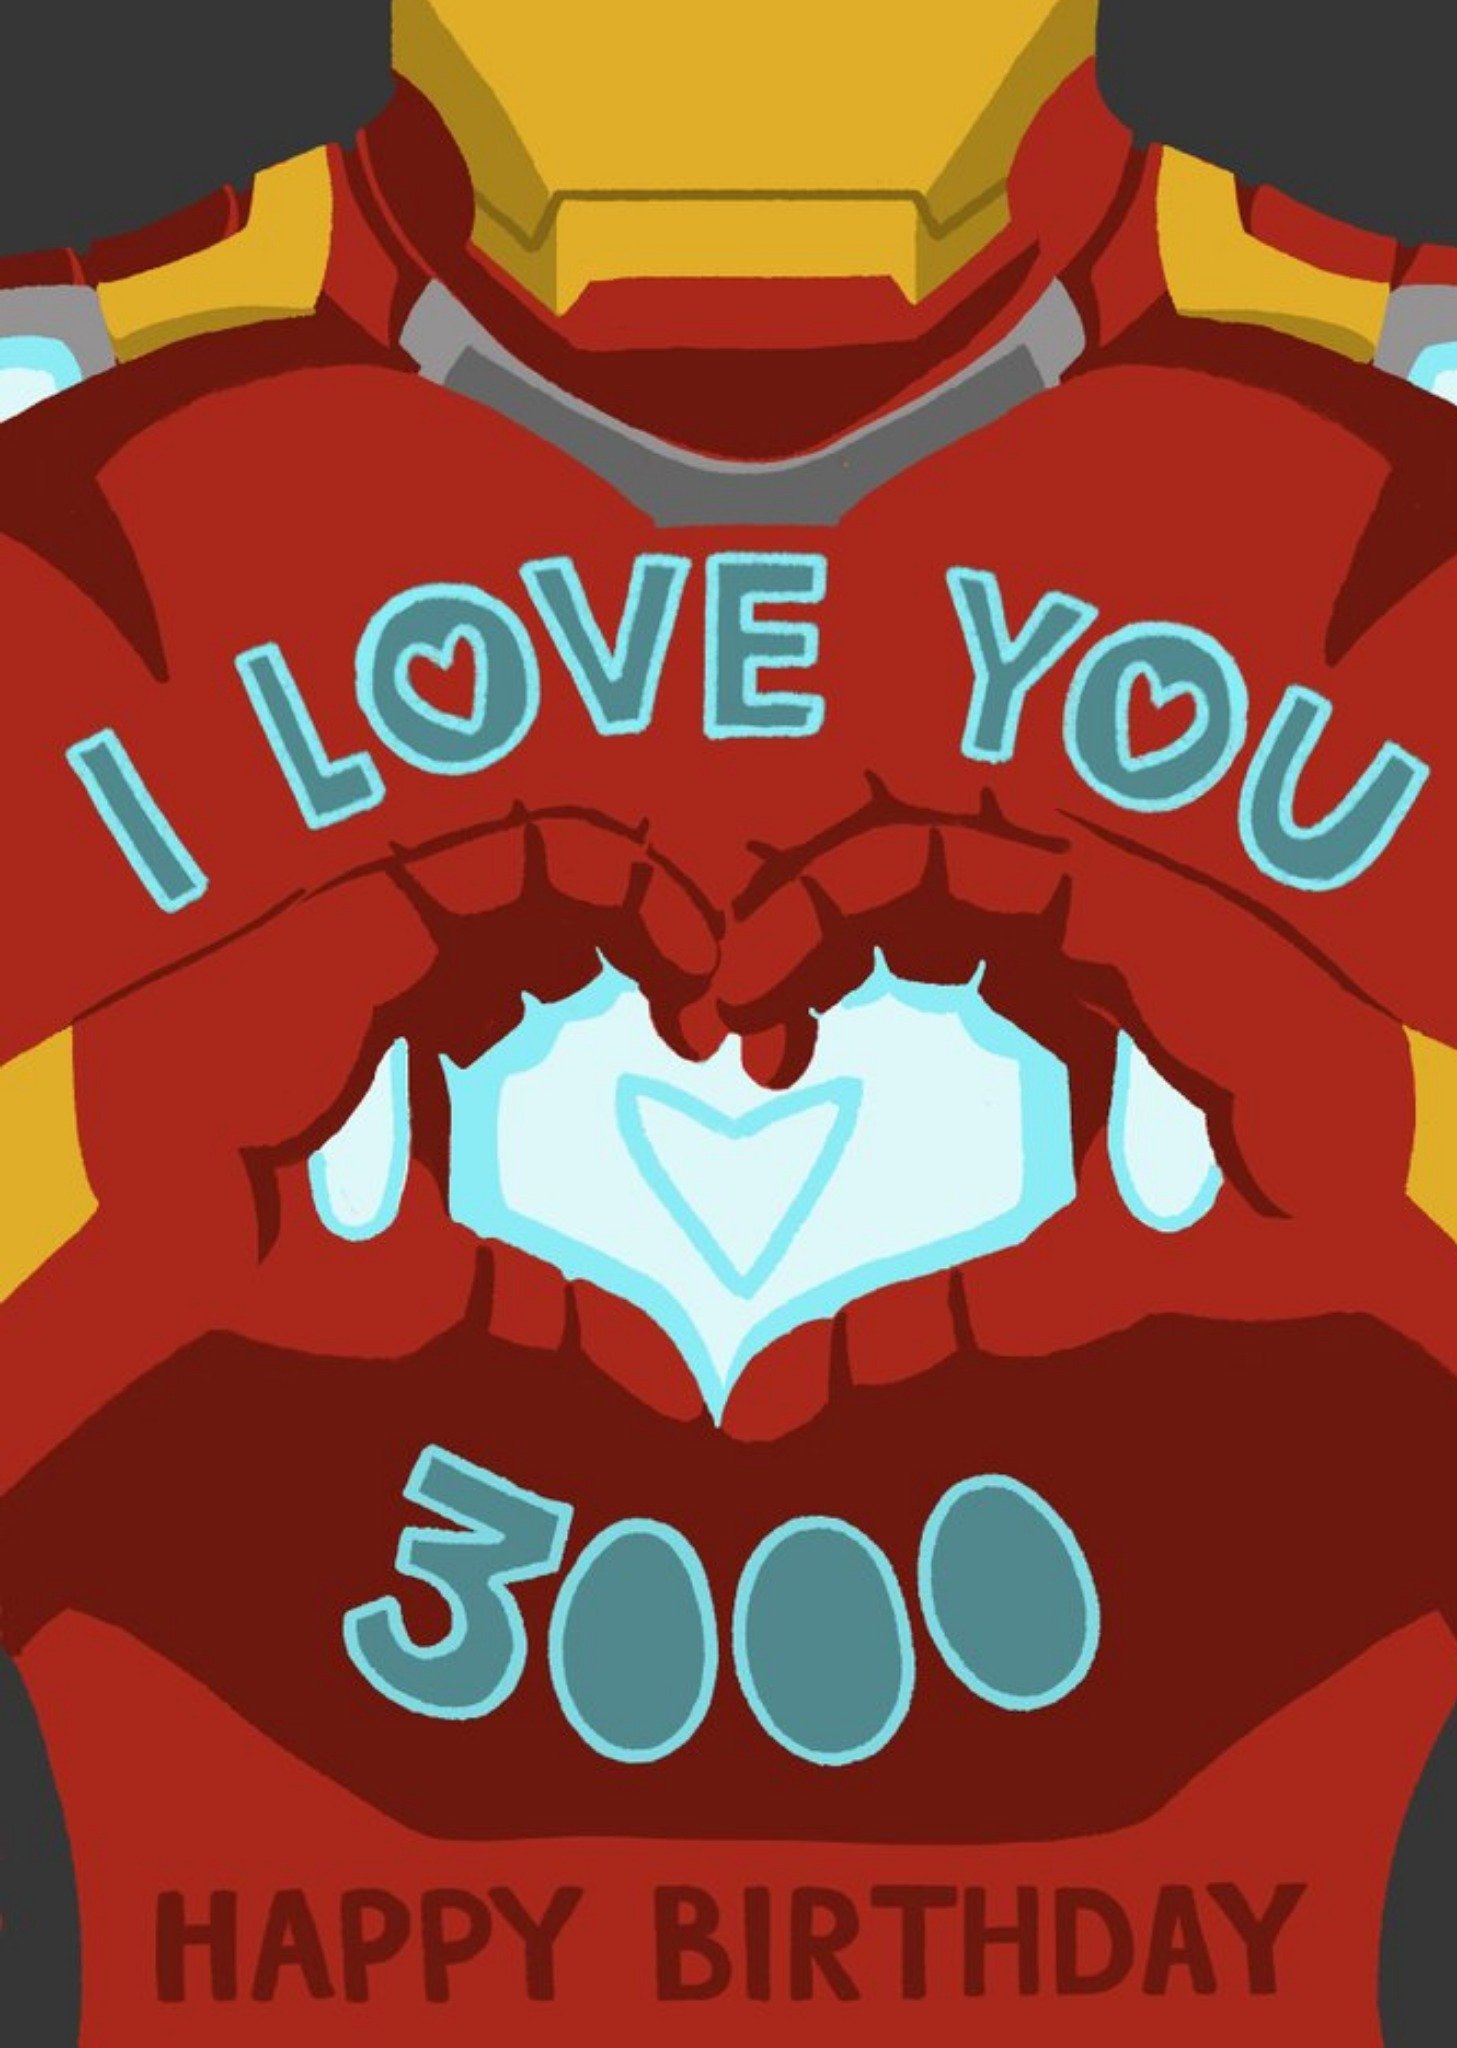 Disney Marvel Comics Iron Man I Love You 3000 Birthday Card Ecard